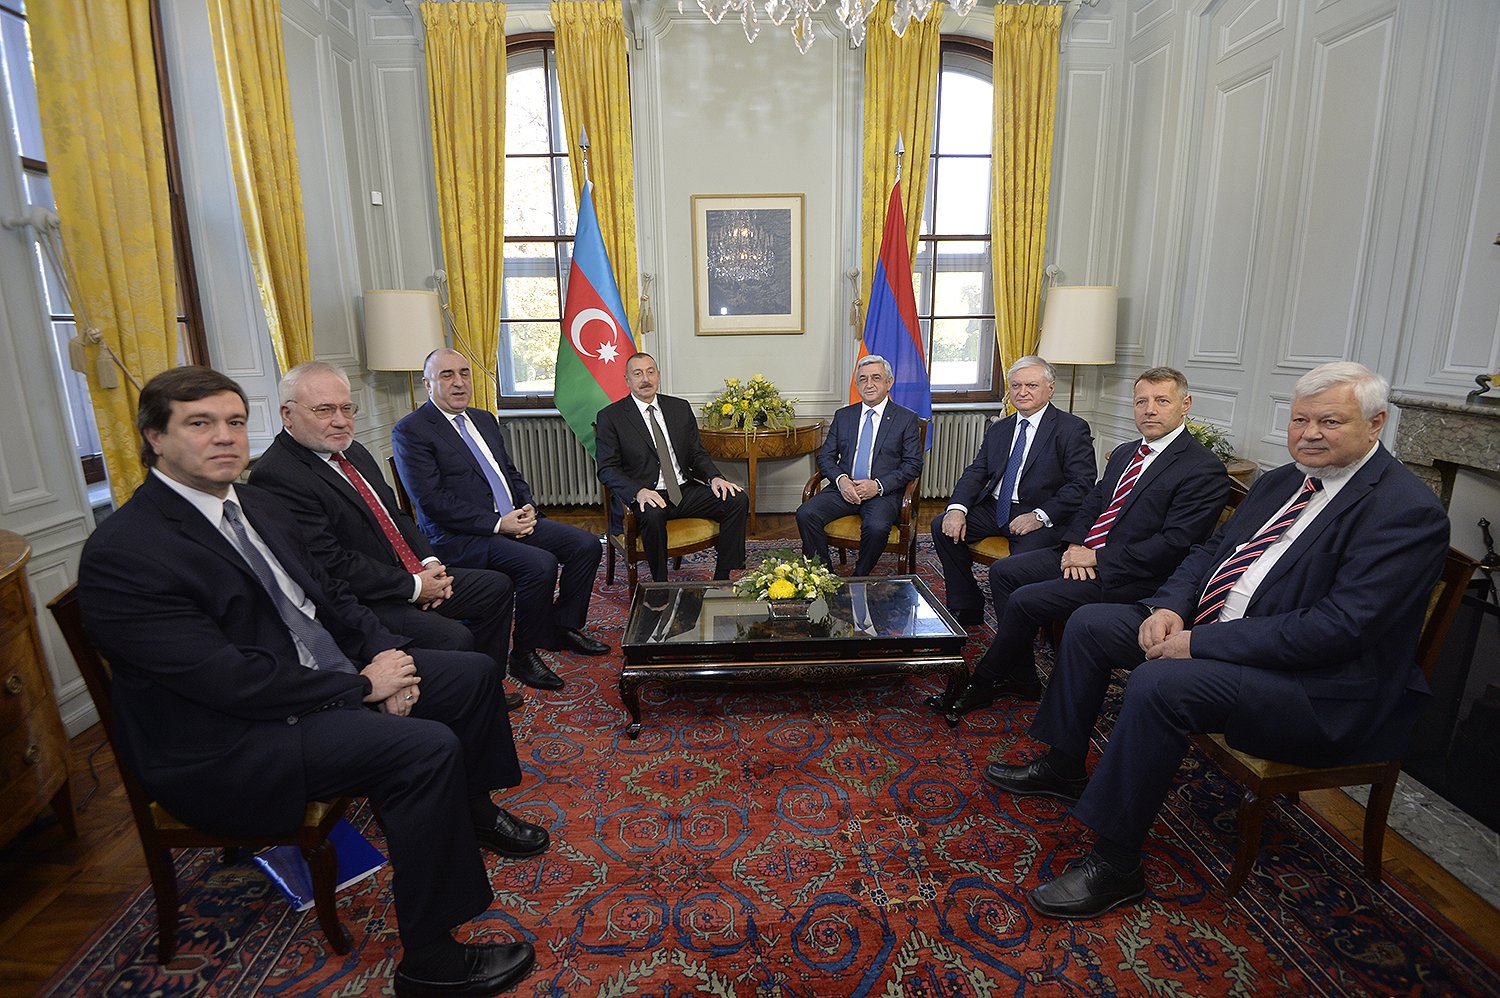 Tête-à-tête meeting between Armenia’s and Azerbaijan’s presidents started